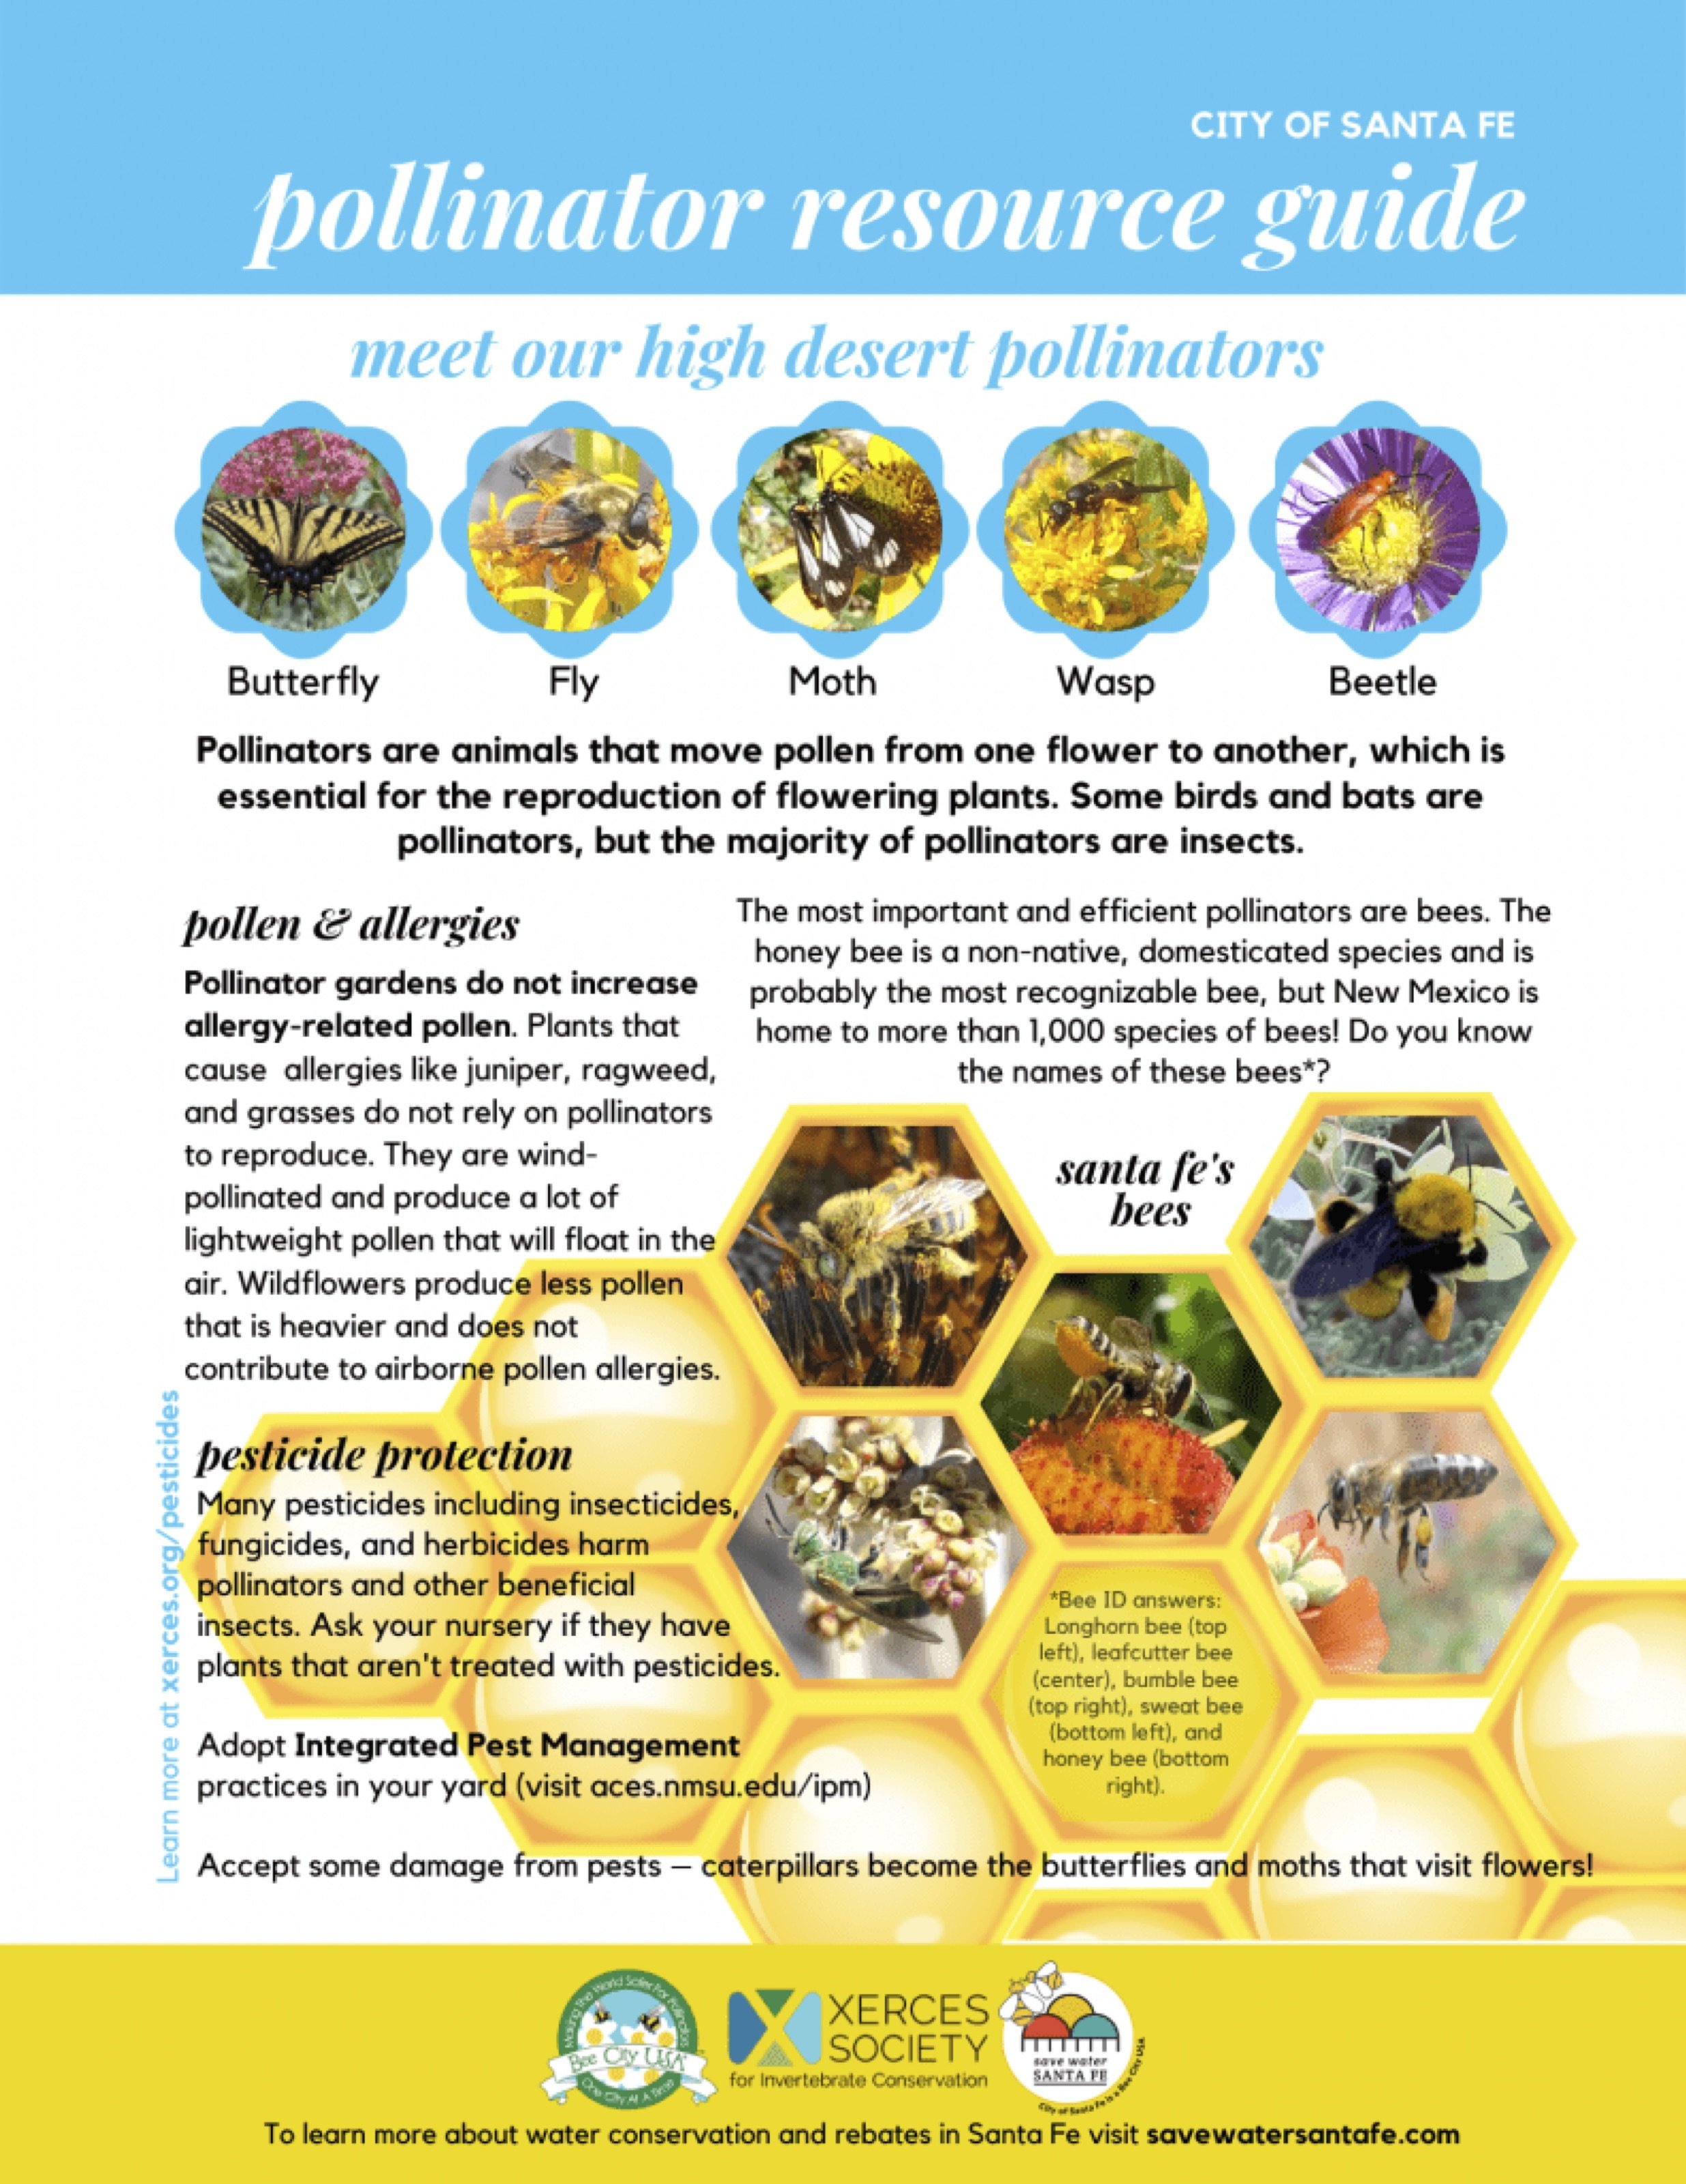 pollinator-guide-back-1-791x1024.jpg